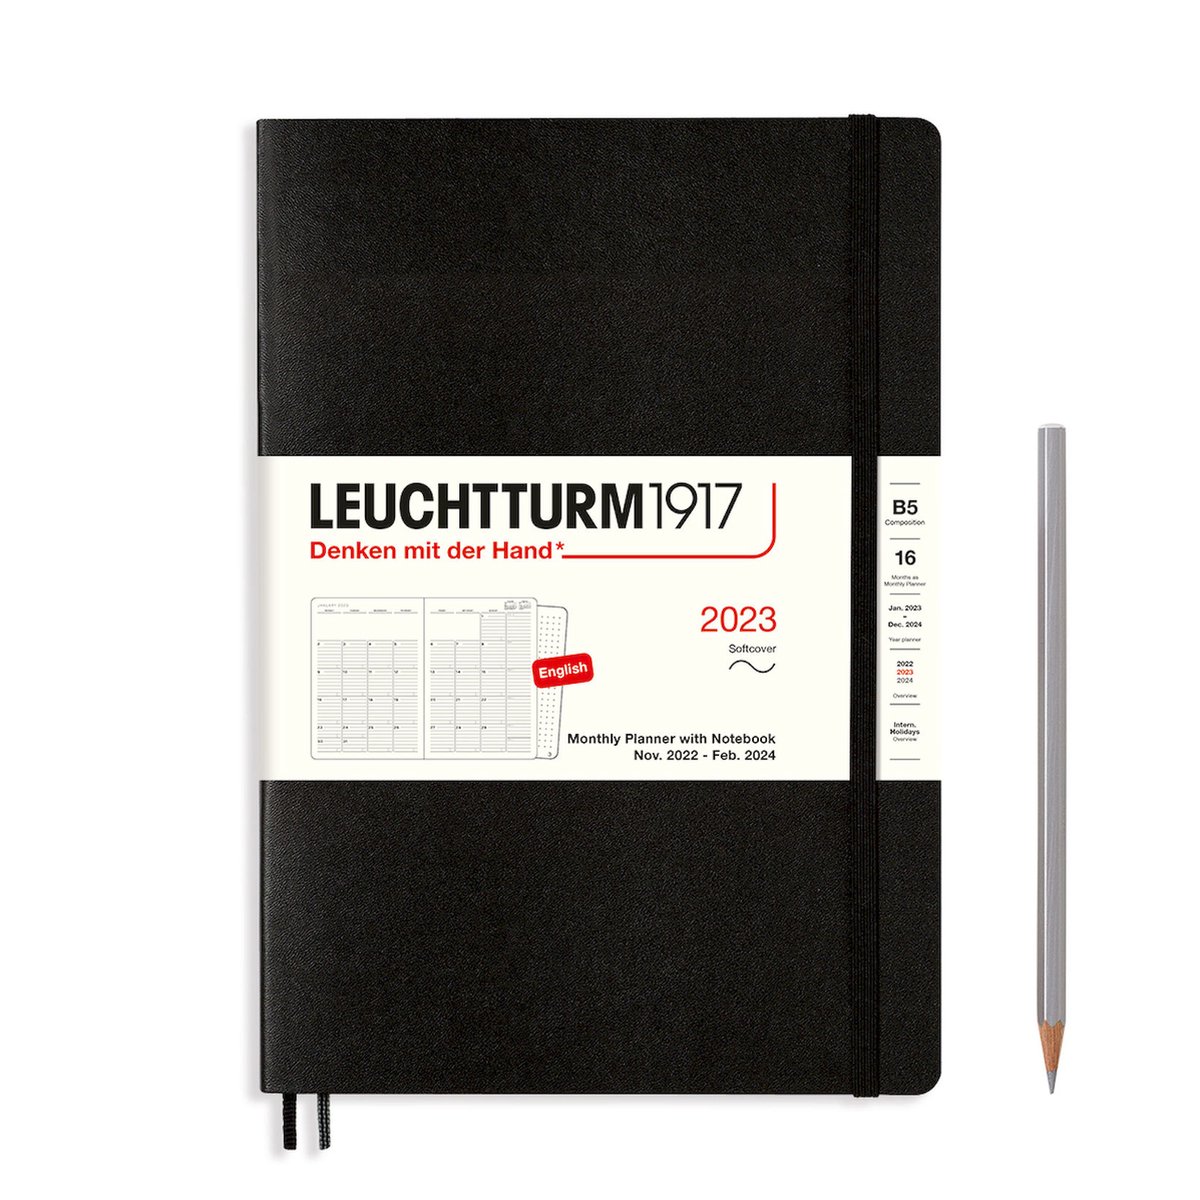 Leuchtturm1917 - agenda - 2023 - maandplanner - 16 maanden - b5 - 17,8 x 25,4 cm - softcover - zwart